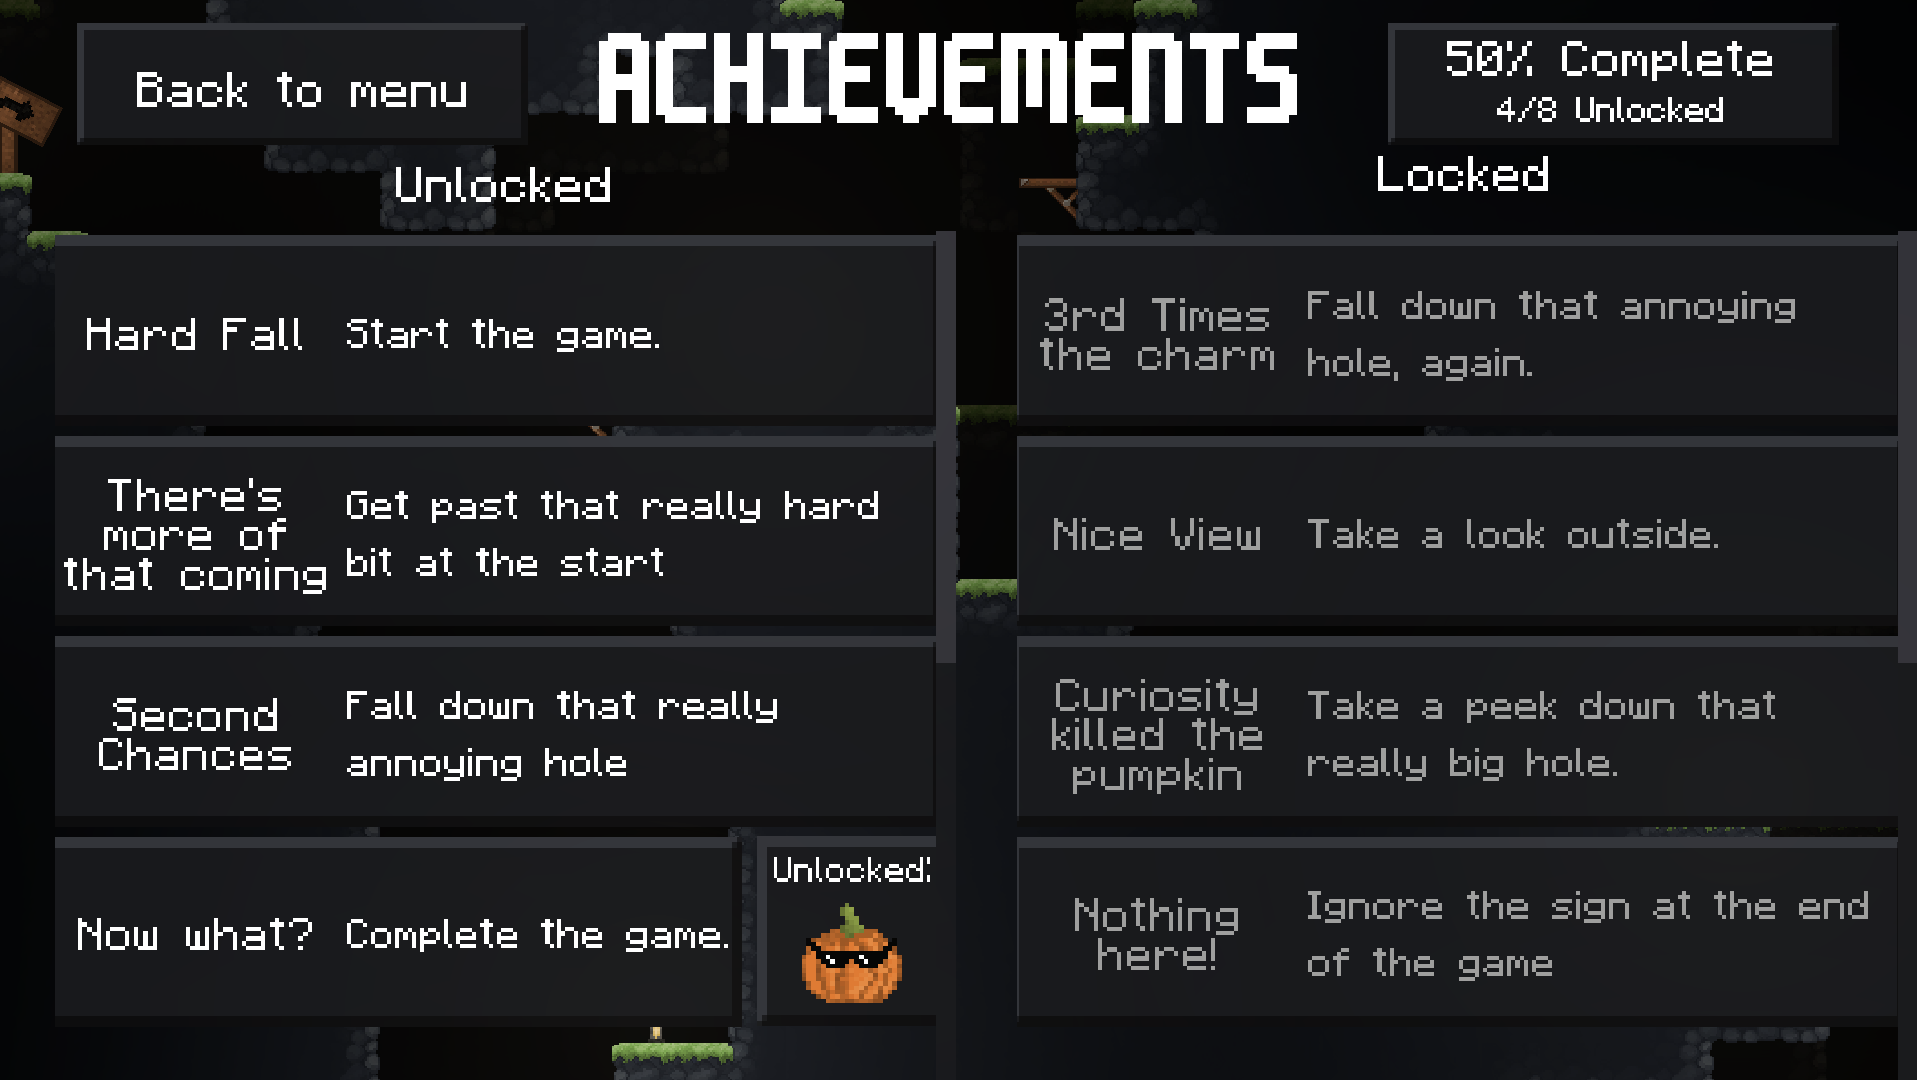 New Achievements UI